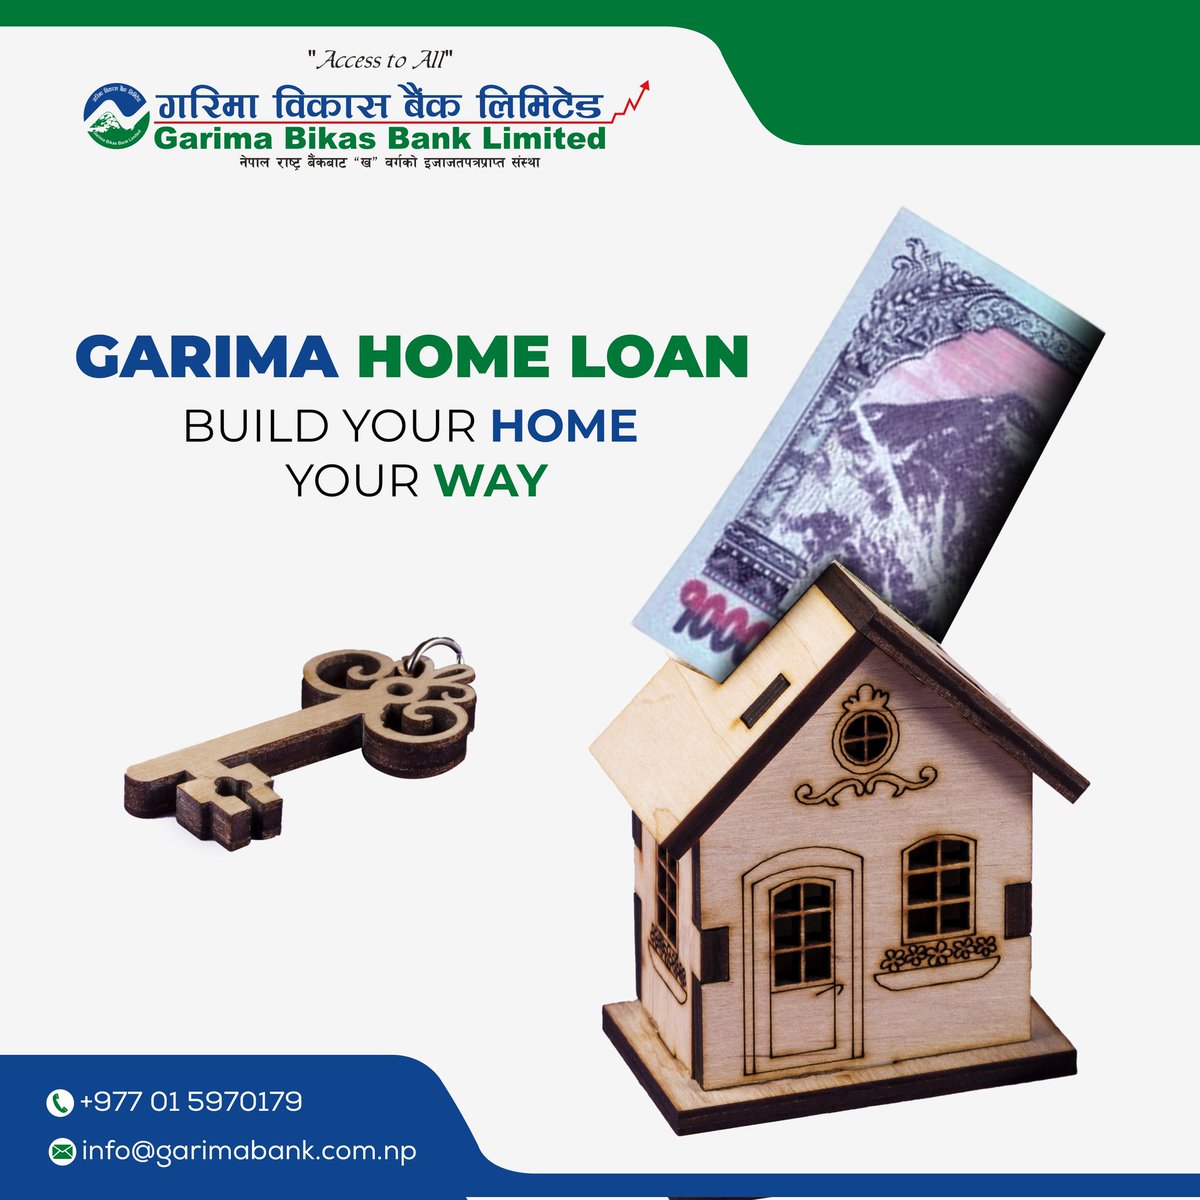 Build your home your way 🏡🏡 with Garima Home Loan .
#Garimabikasbank
#AccessToAll
#Safedigitalbanking
#savingfuture
#homeloan
#yourhomeyourway